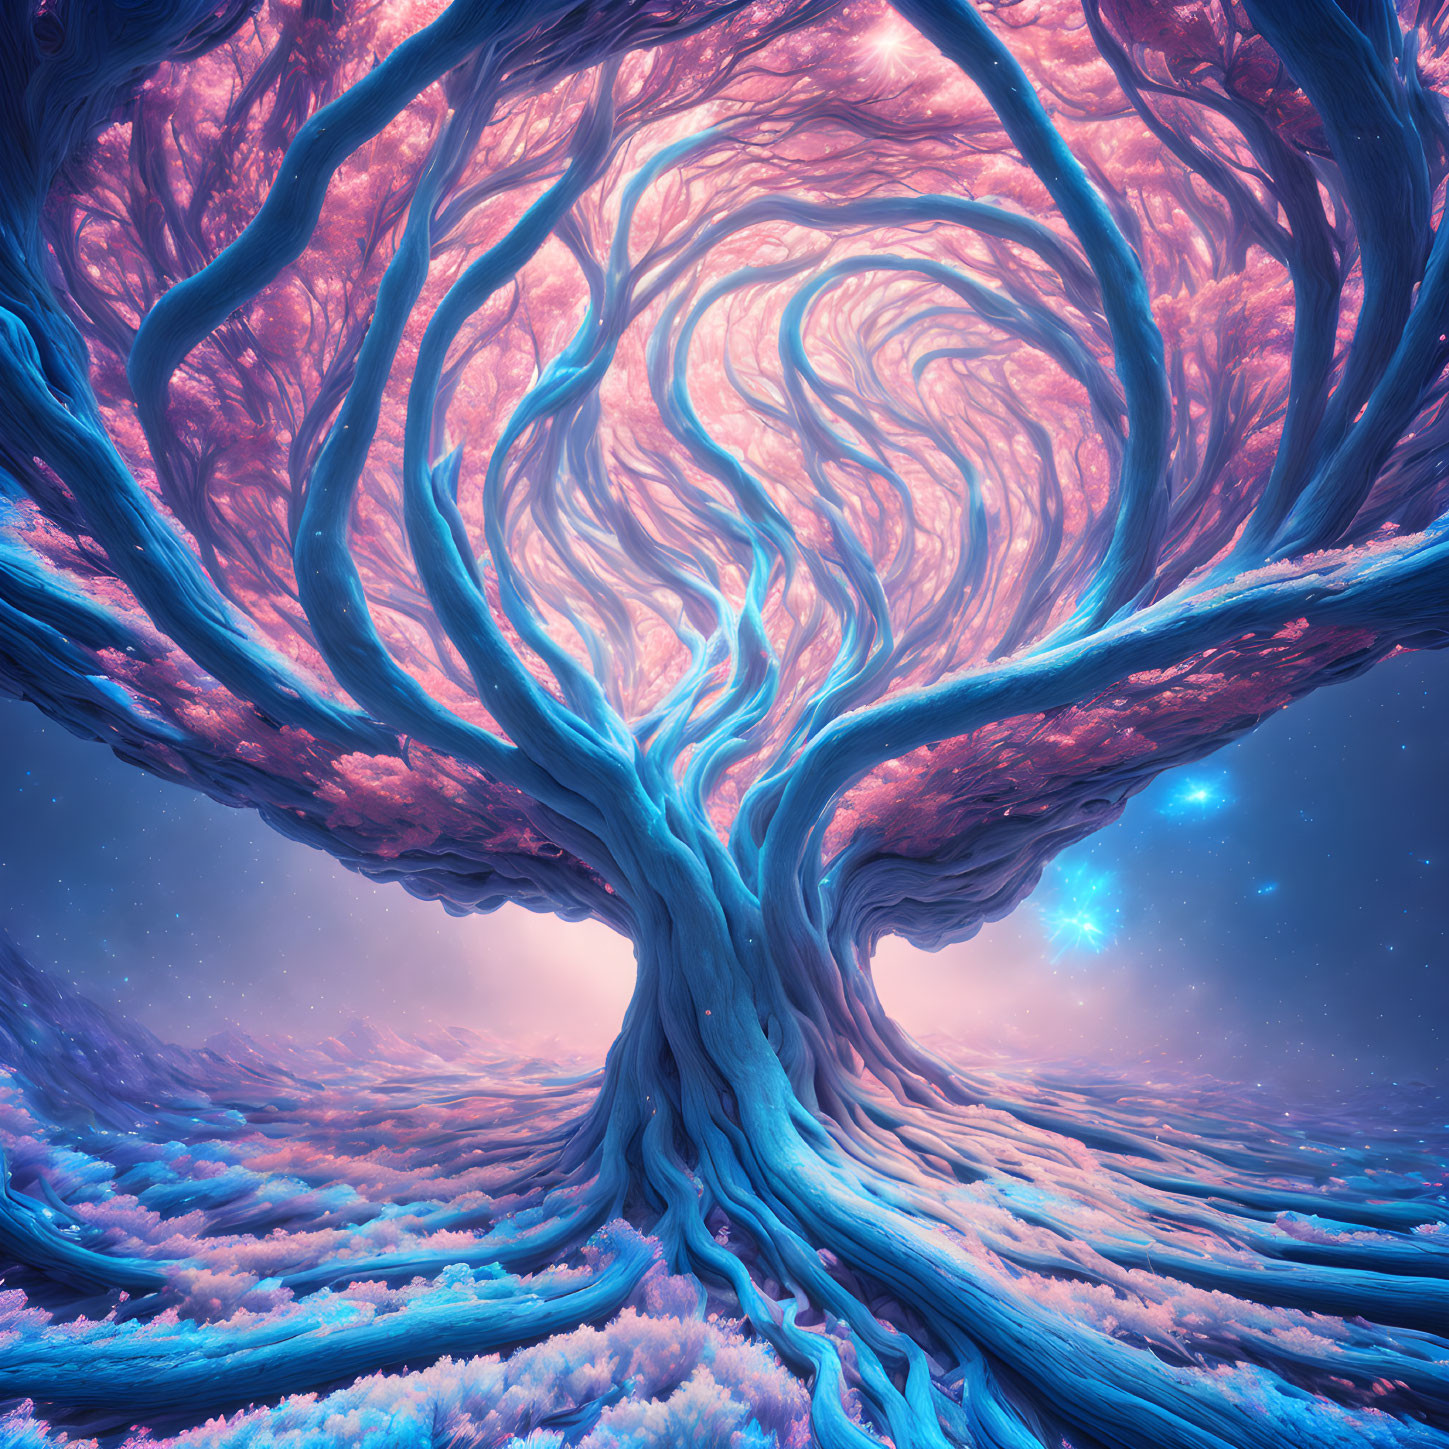 Colorful surreal illustration: Massive tree under starry sky